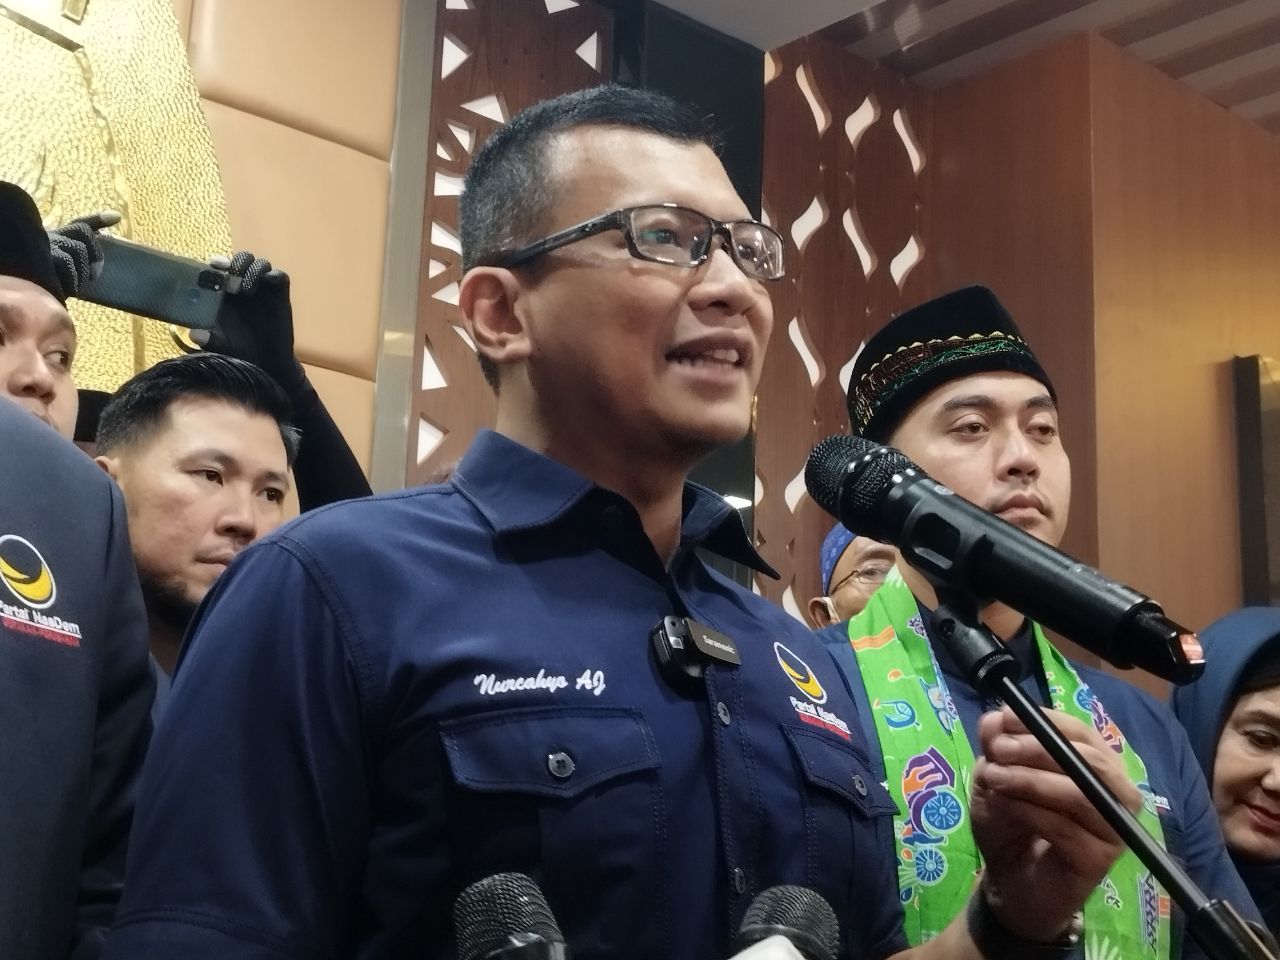 Ketua DPW Nasdem DKI: Sampai Langit Runtuh, Kami Tetap Dukung Anies Baswedan!